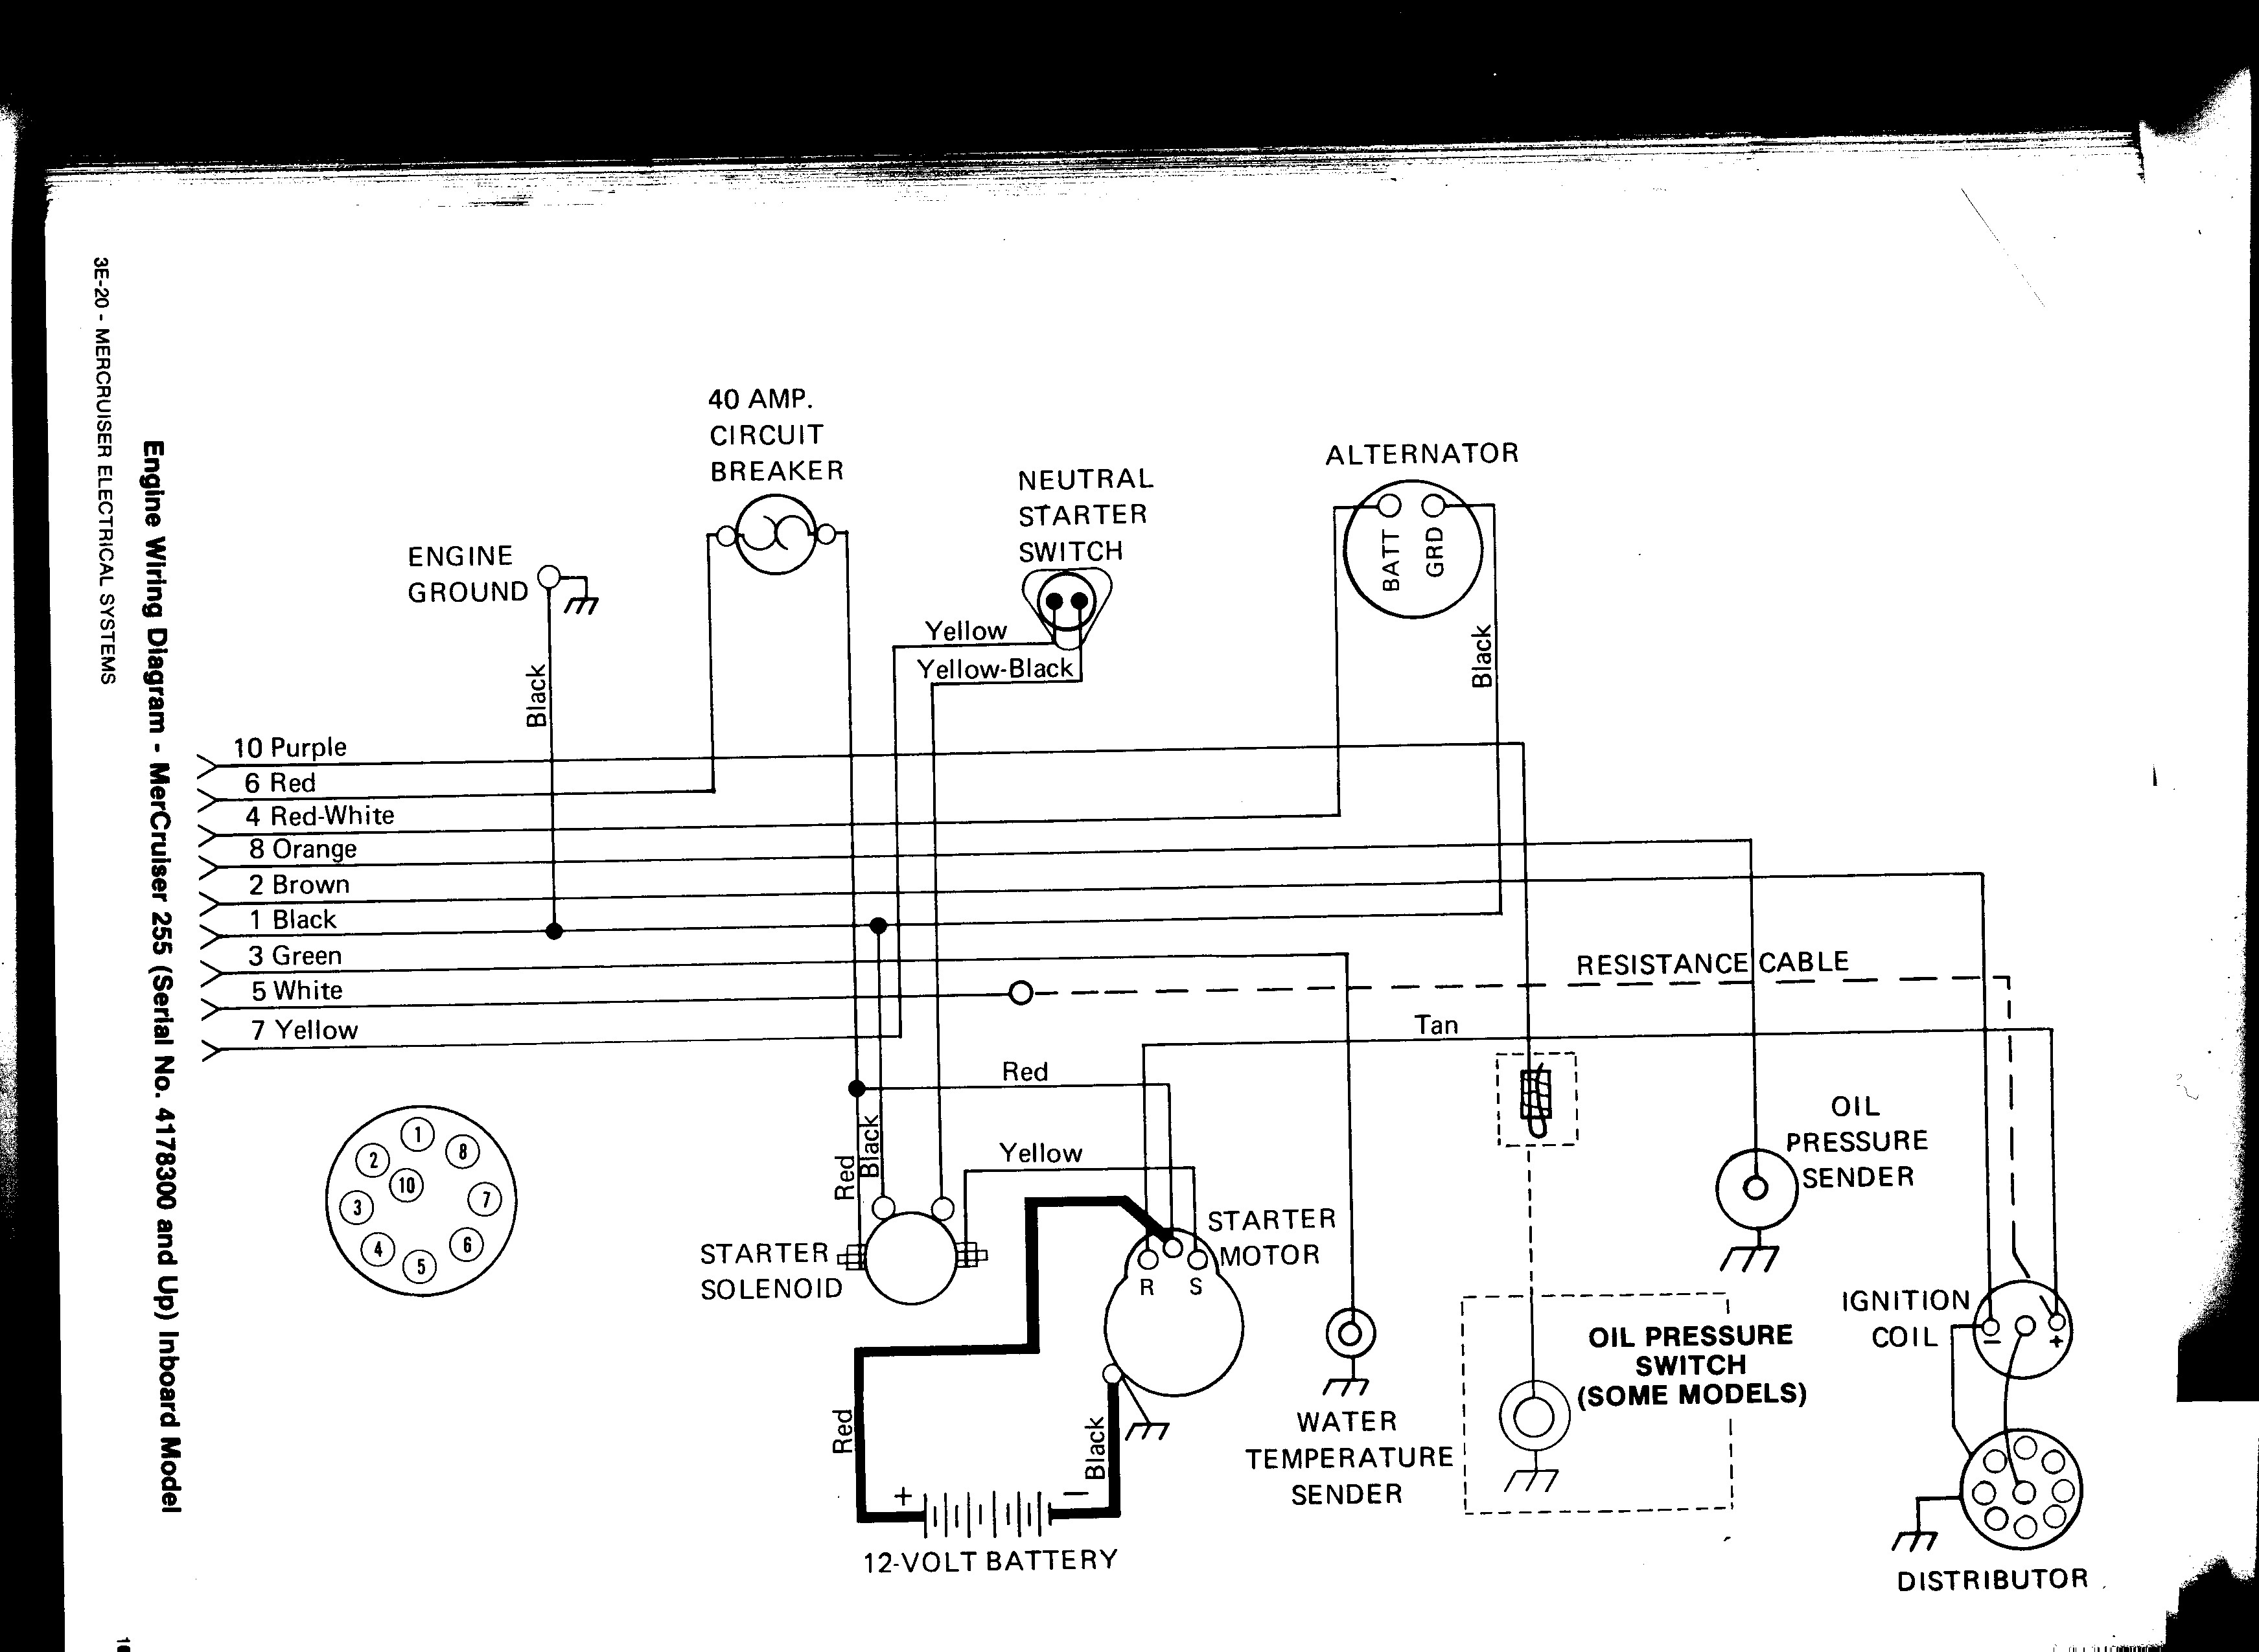 2010 Mazda 3 Engine Wiring Diagram] Mazda 6 2002 User Wiring Diagram Full Version Hd Of 2010 Mazda 3 Engine Wiring